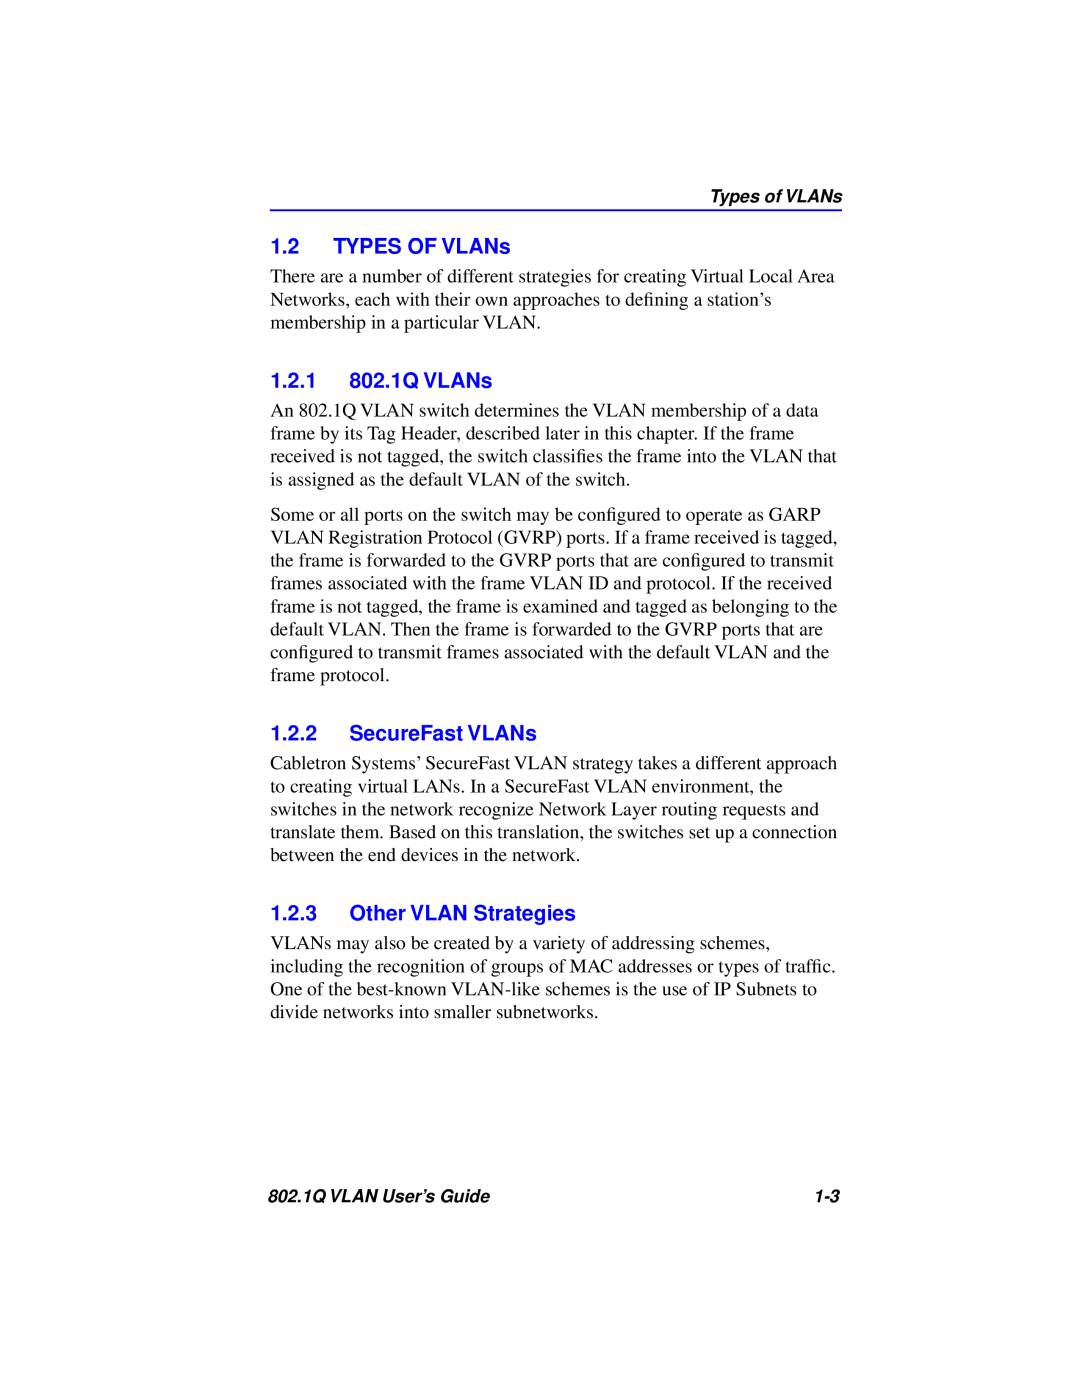 Cabletron Systems manual TYPES OF VLANs, 1.2.1 802.1Q VLANs, SecureFast VLANs, Other VLAN Strategies 